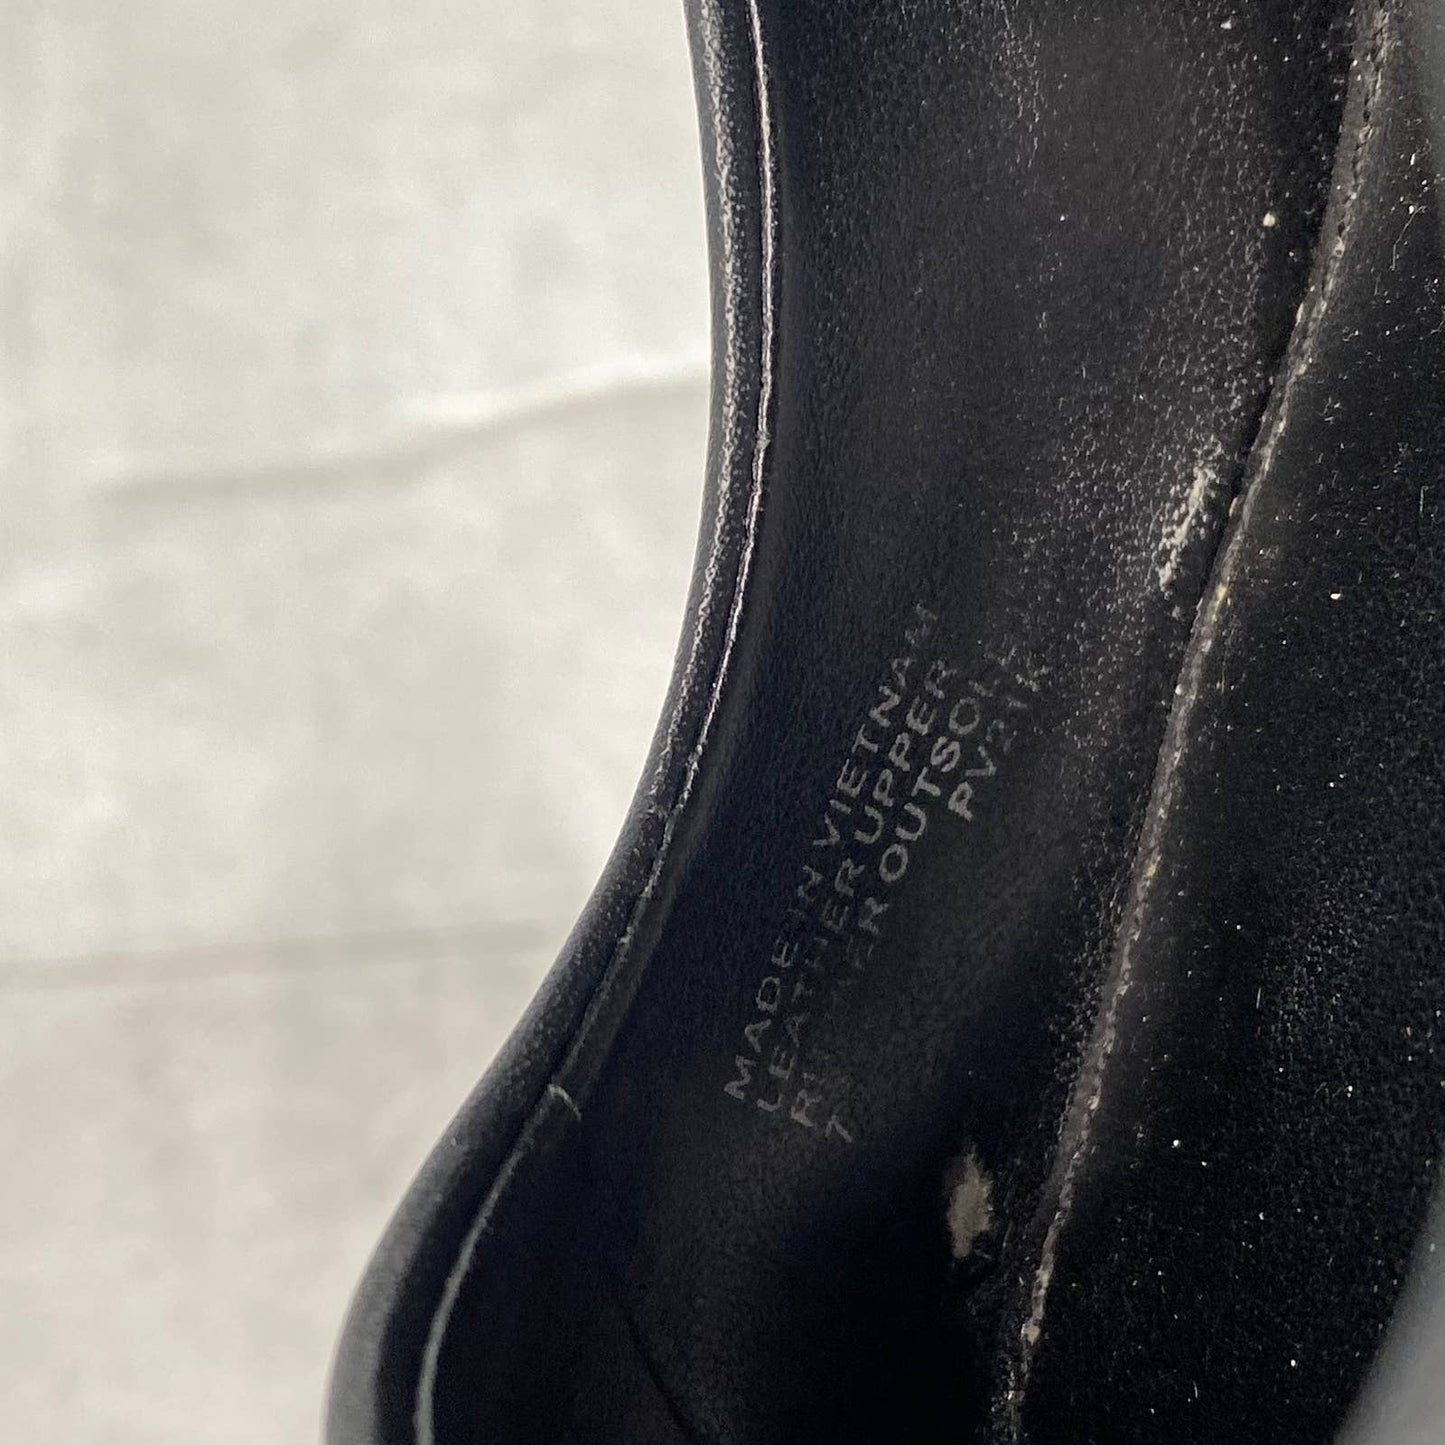 MICHAEL MICHAEL KORS Women's Black Leather Alina Flex Pointed-Toe Pumps SZ 7.5